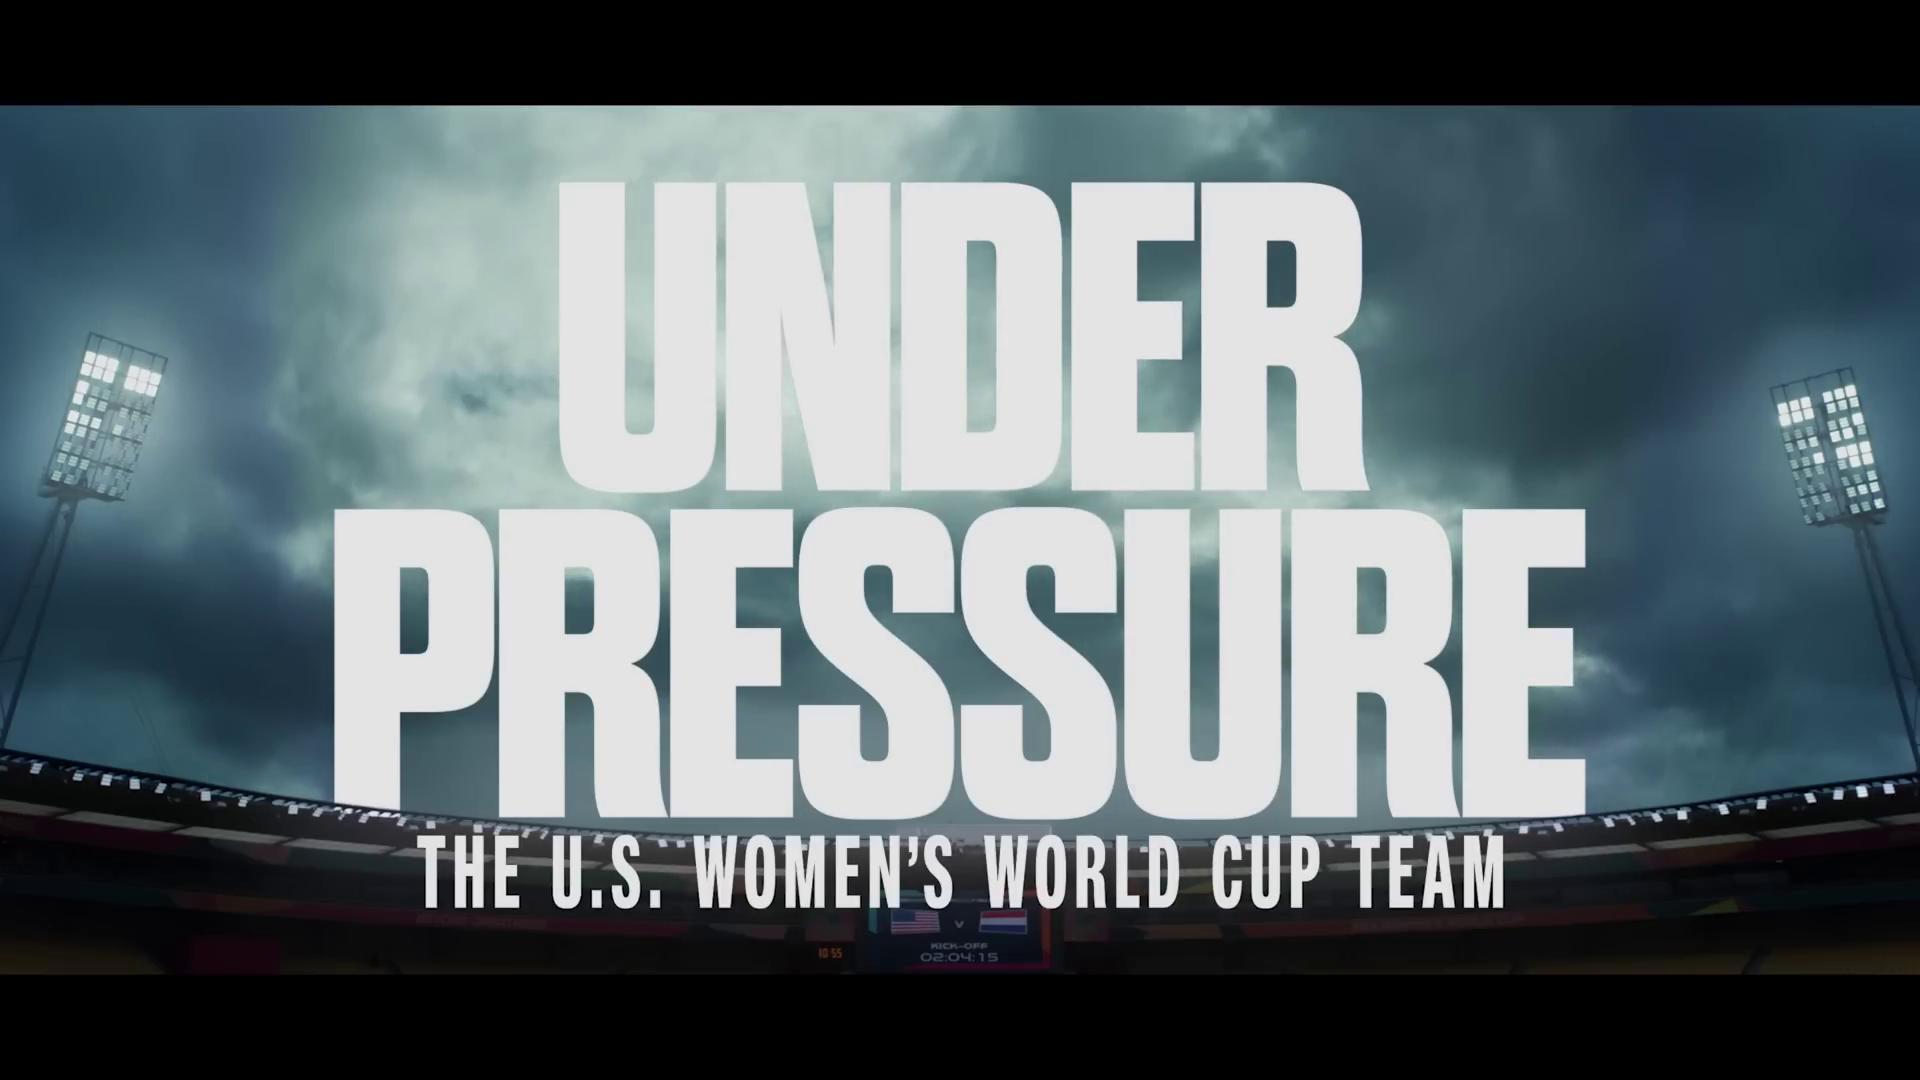 The U.S. Women's World Cup